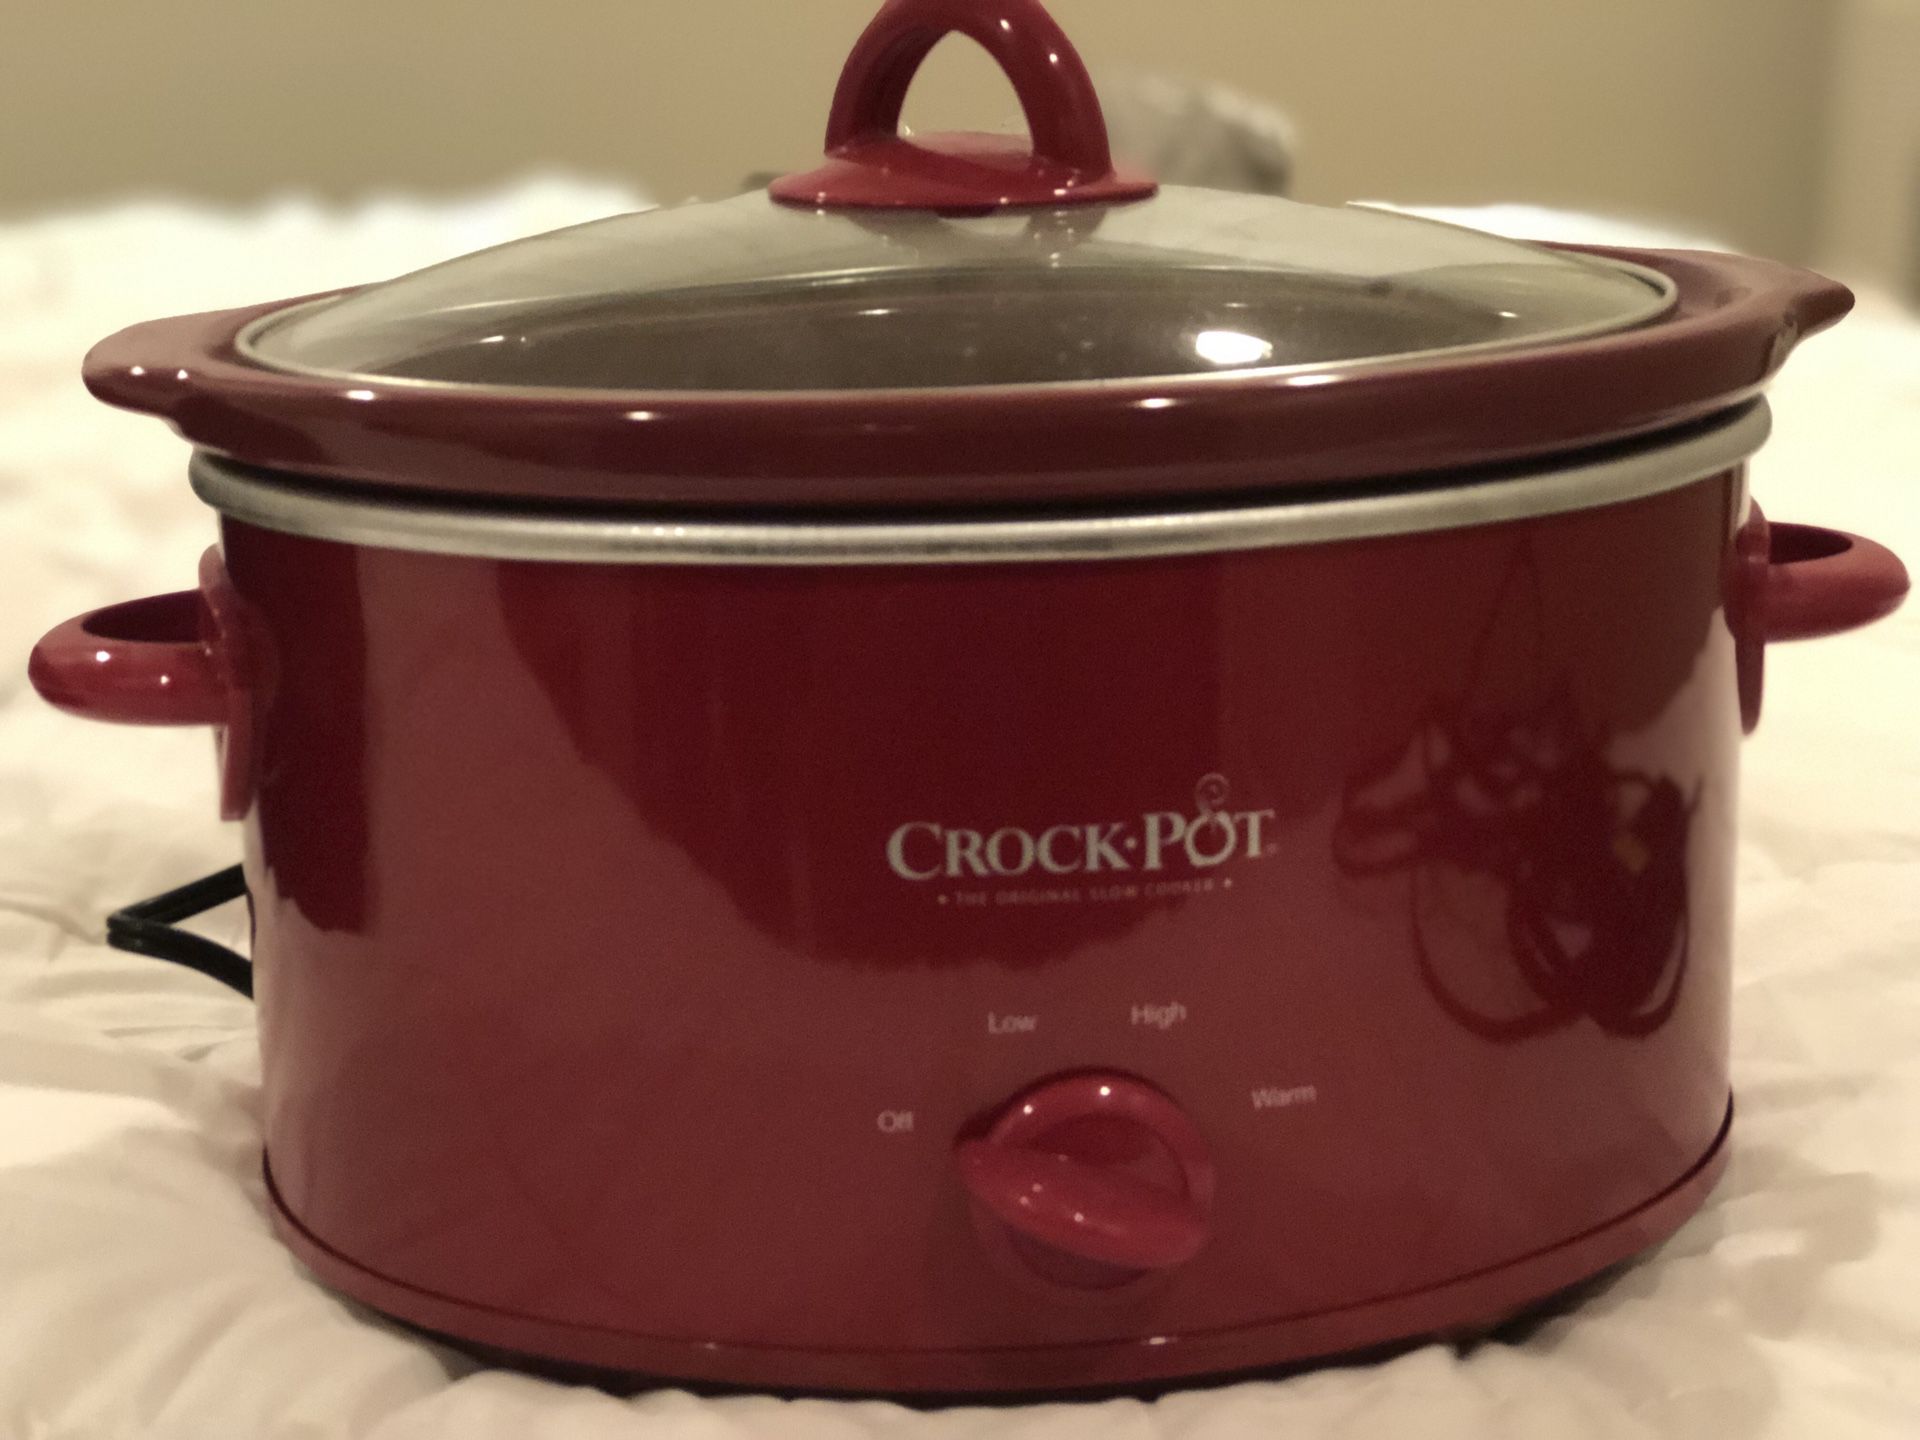 Red Crockpot slow cooker